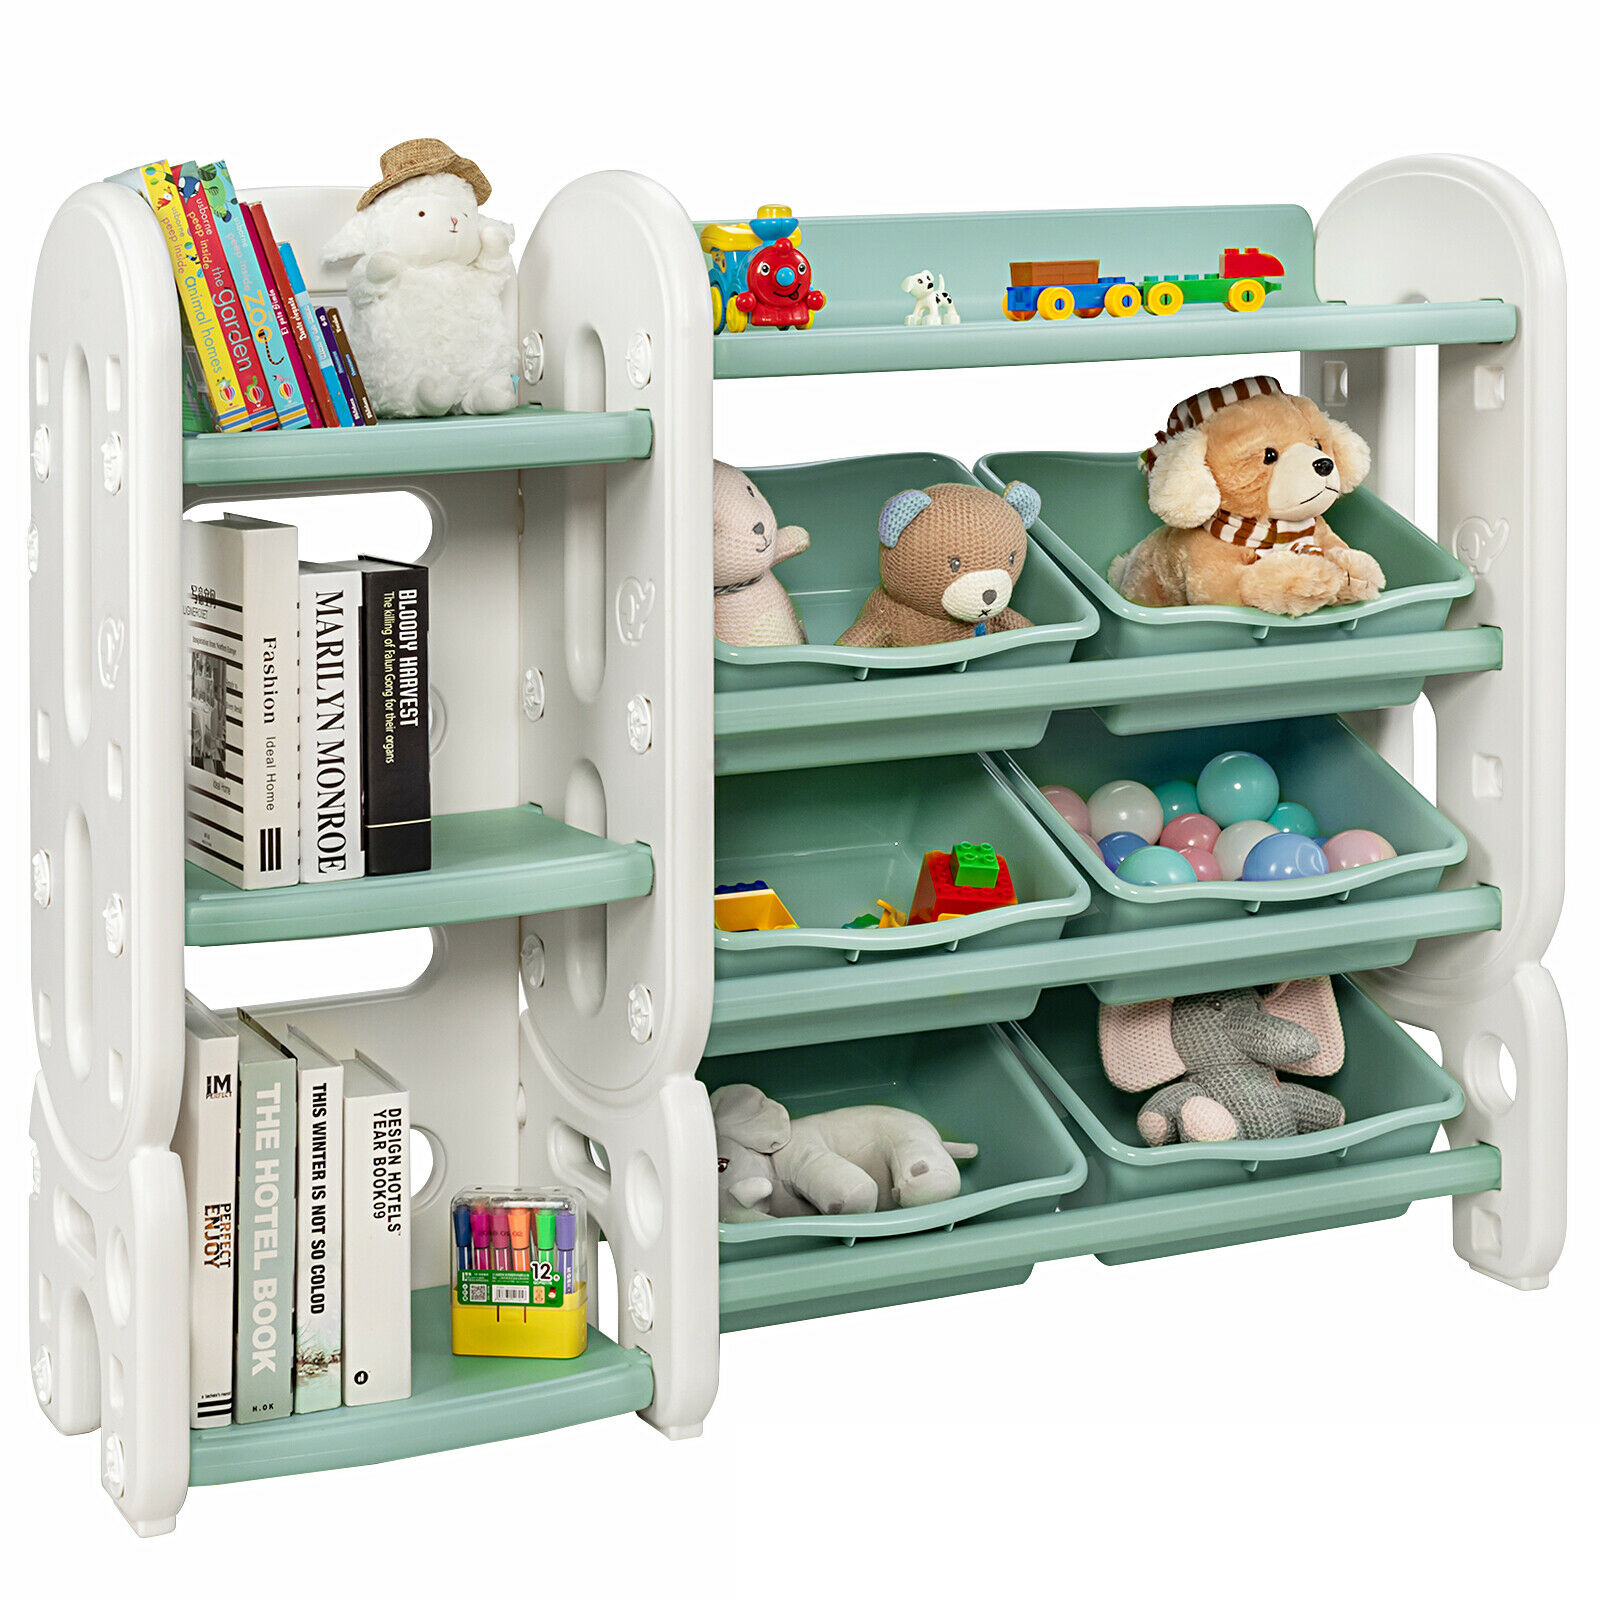 Kids Toy Storage Organizer W/bins & Multi-layer Shelf For Bedroom Playroom Green